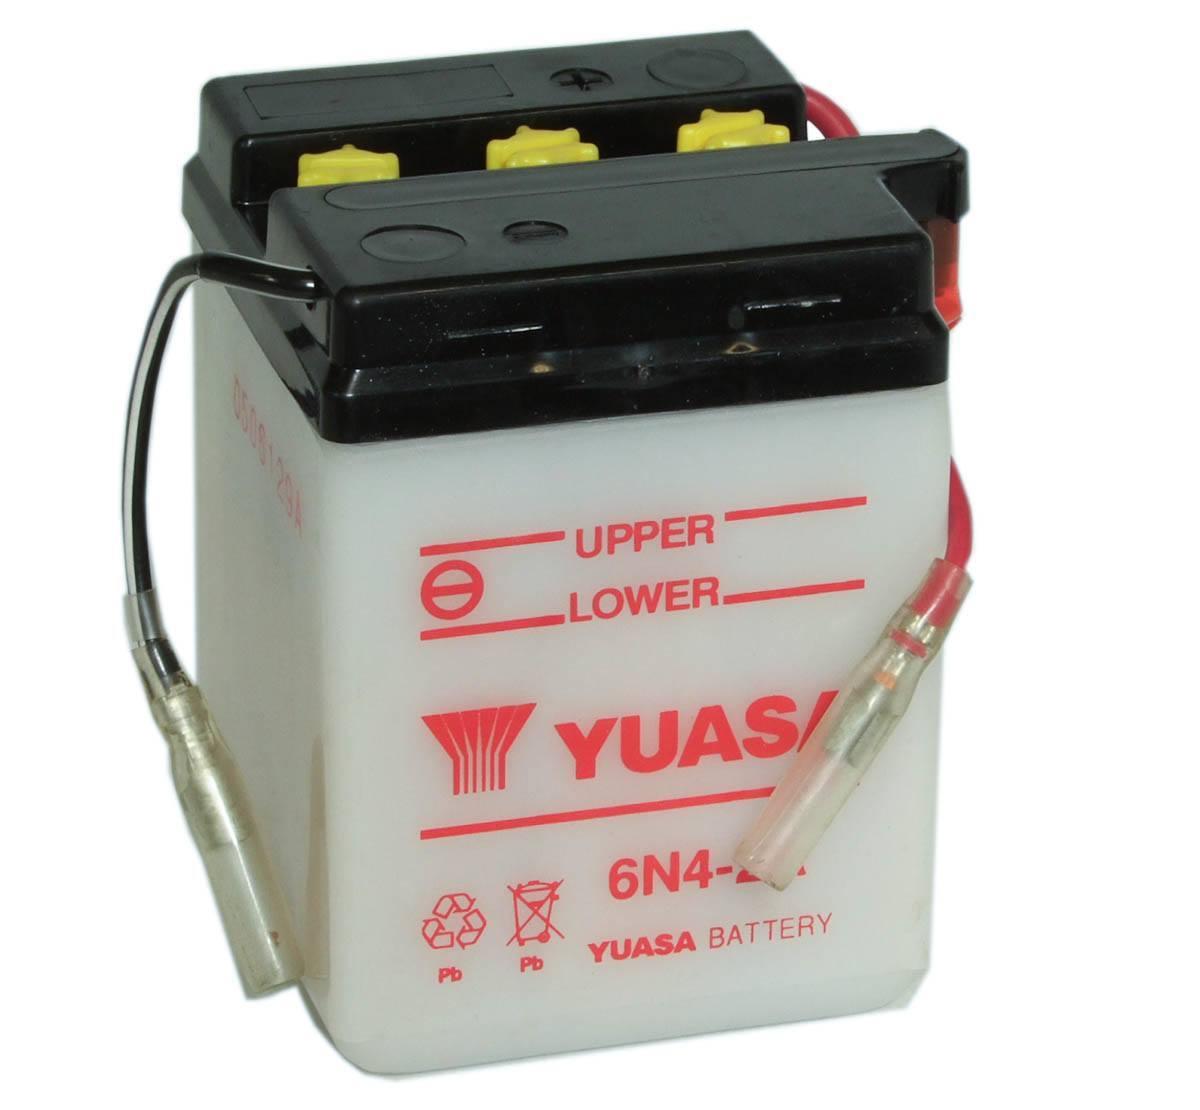 Yuasa 6N4-2A 6V Motorcycle Battery